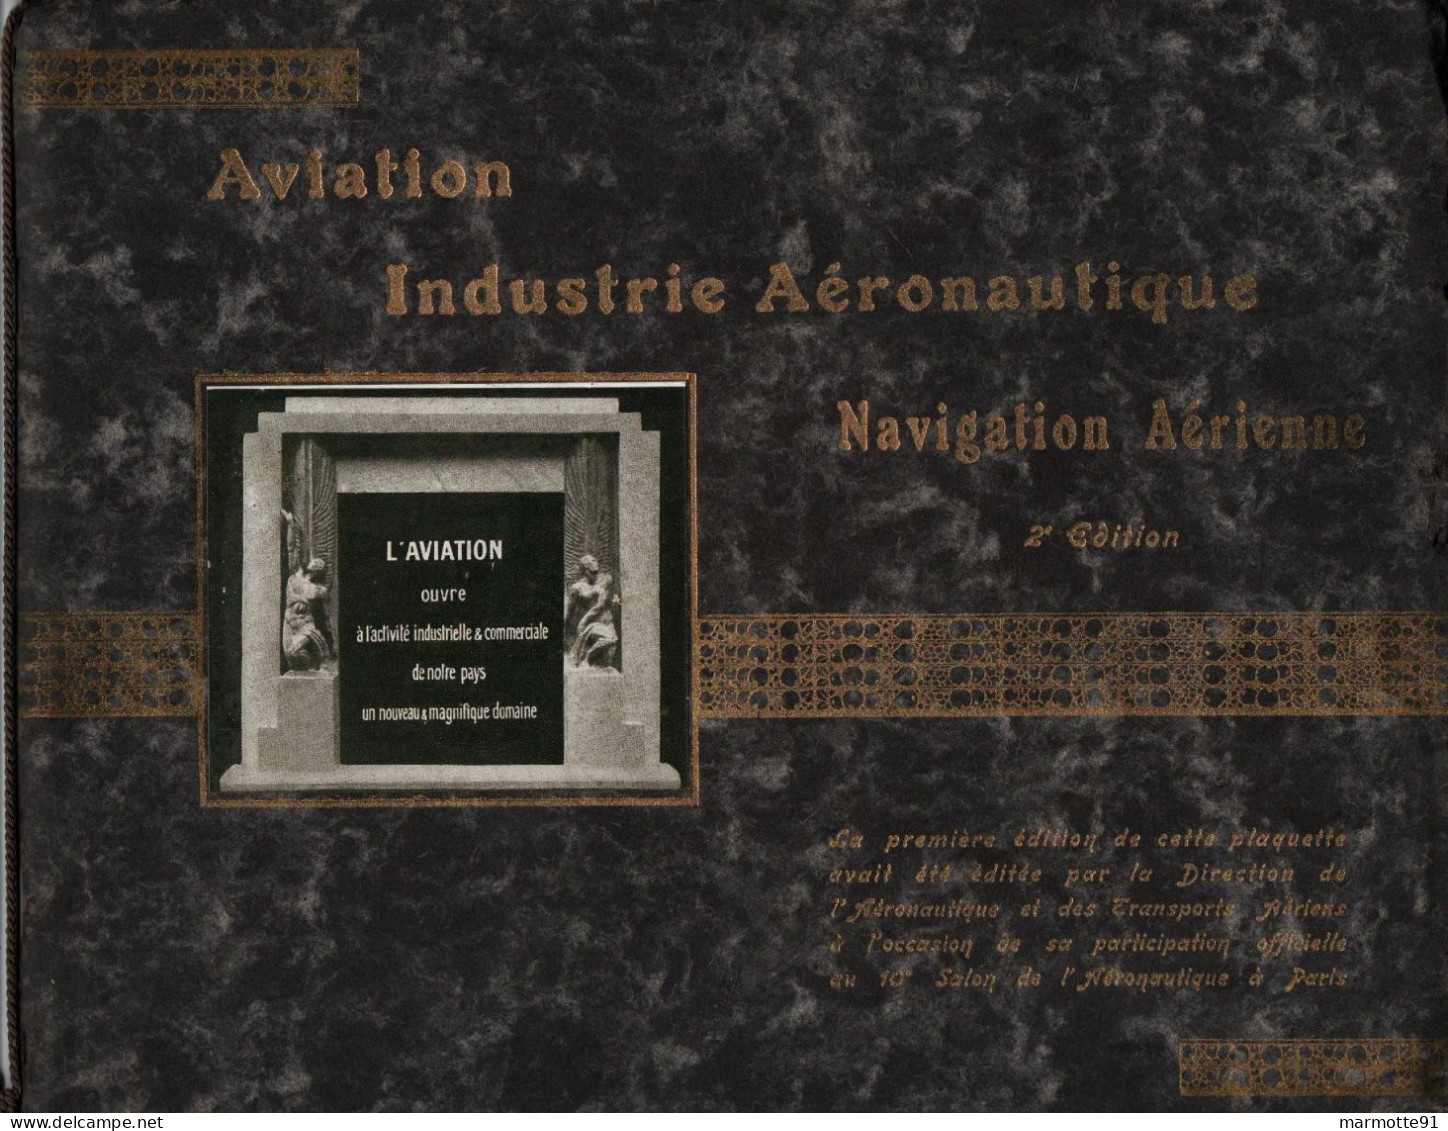 AVIATION INDUSTRIE AERONAUTIQUE NAVIGATION AERIENNE 2e EDITION  10e SALON AERONAUTIQUE PARIS - AeroAirplanes